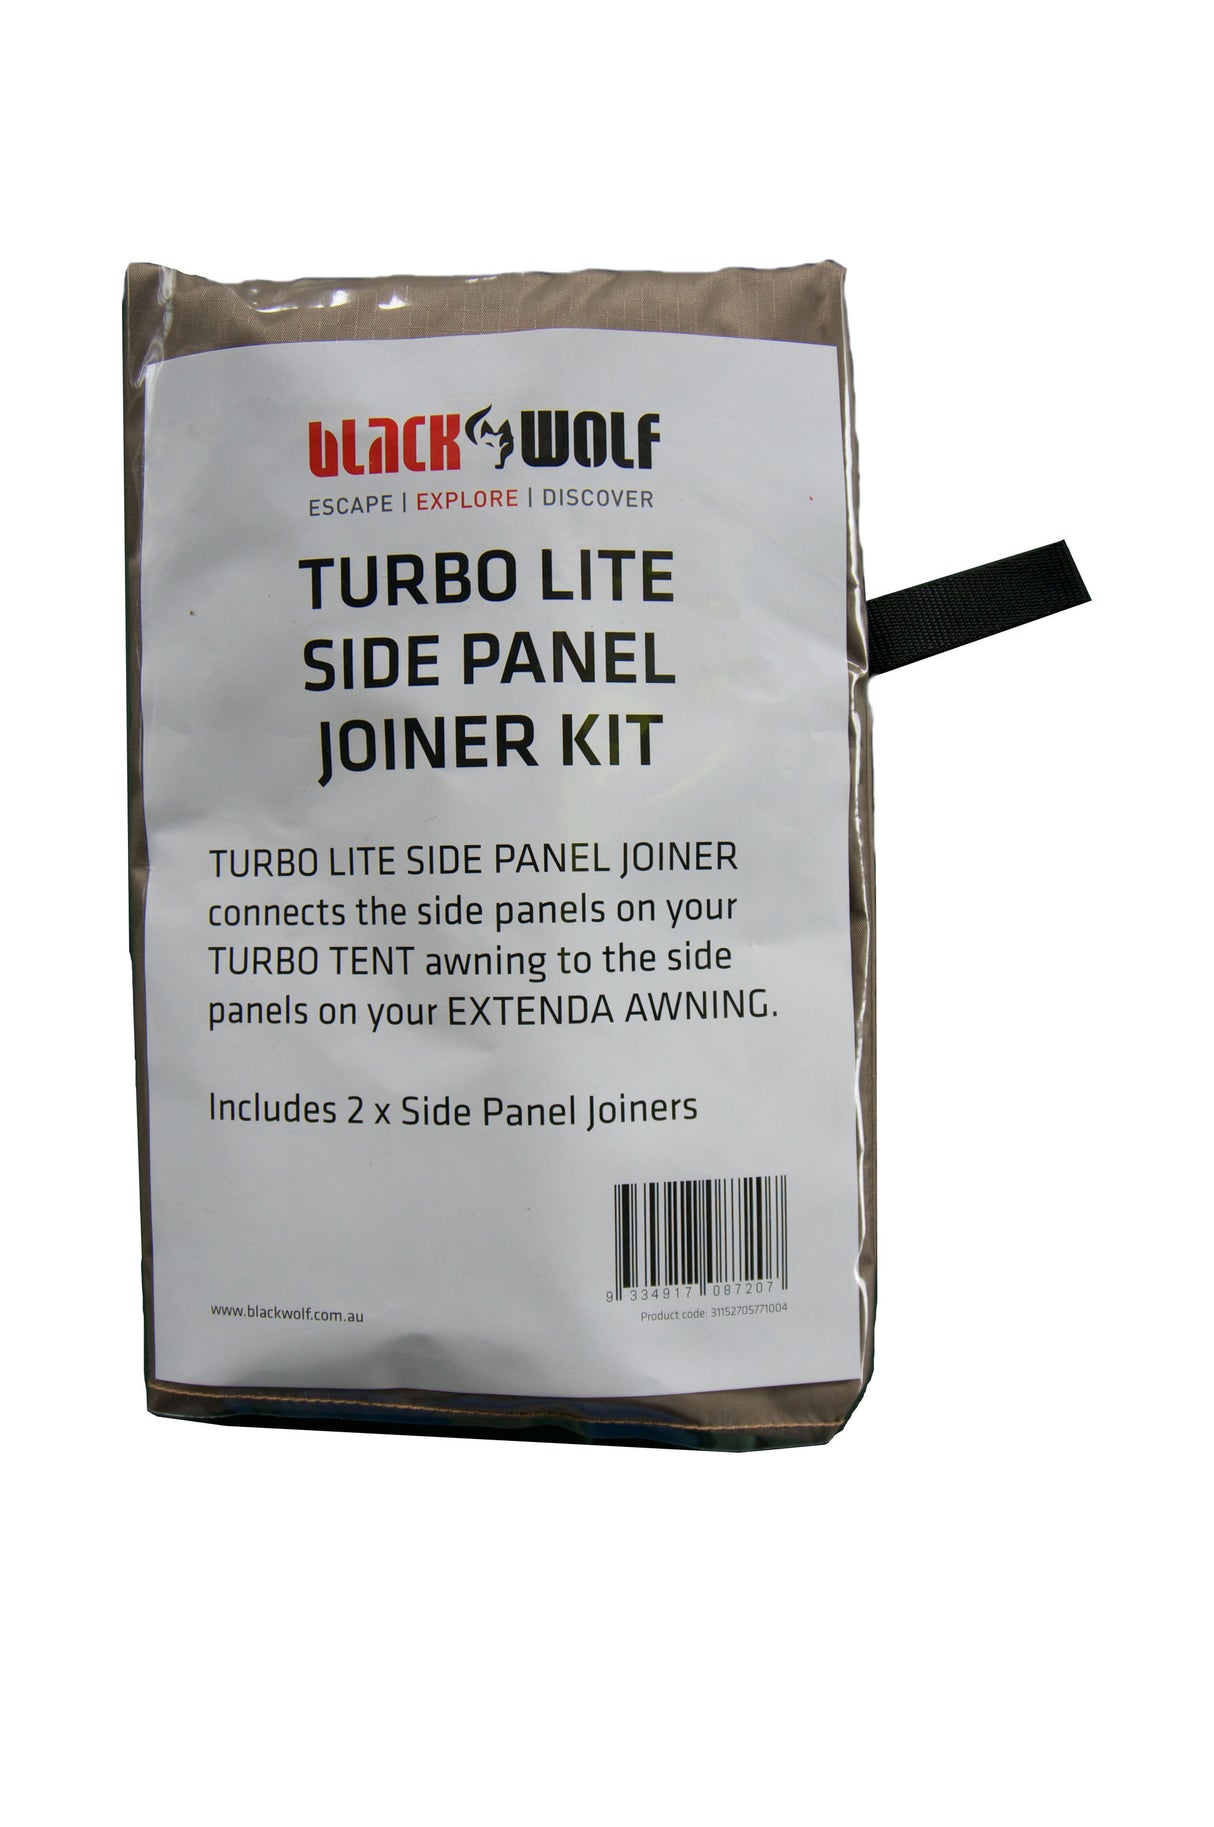 BlackWolf Turbo Lite Side Panel Join Kit